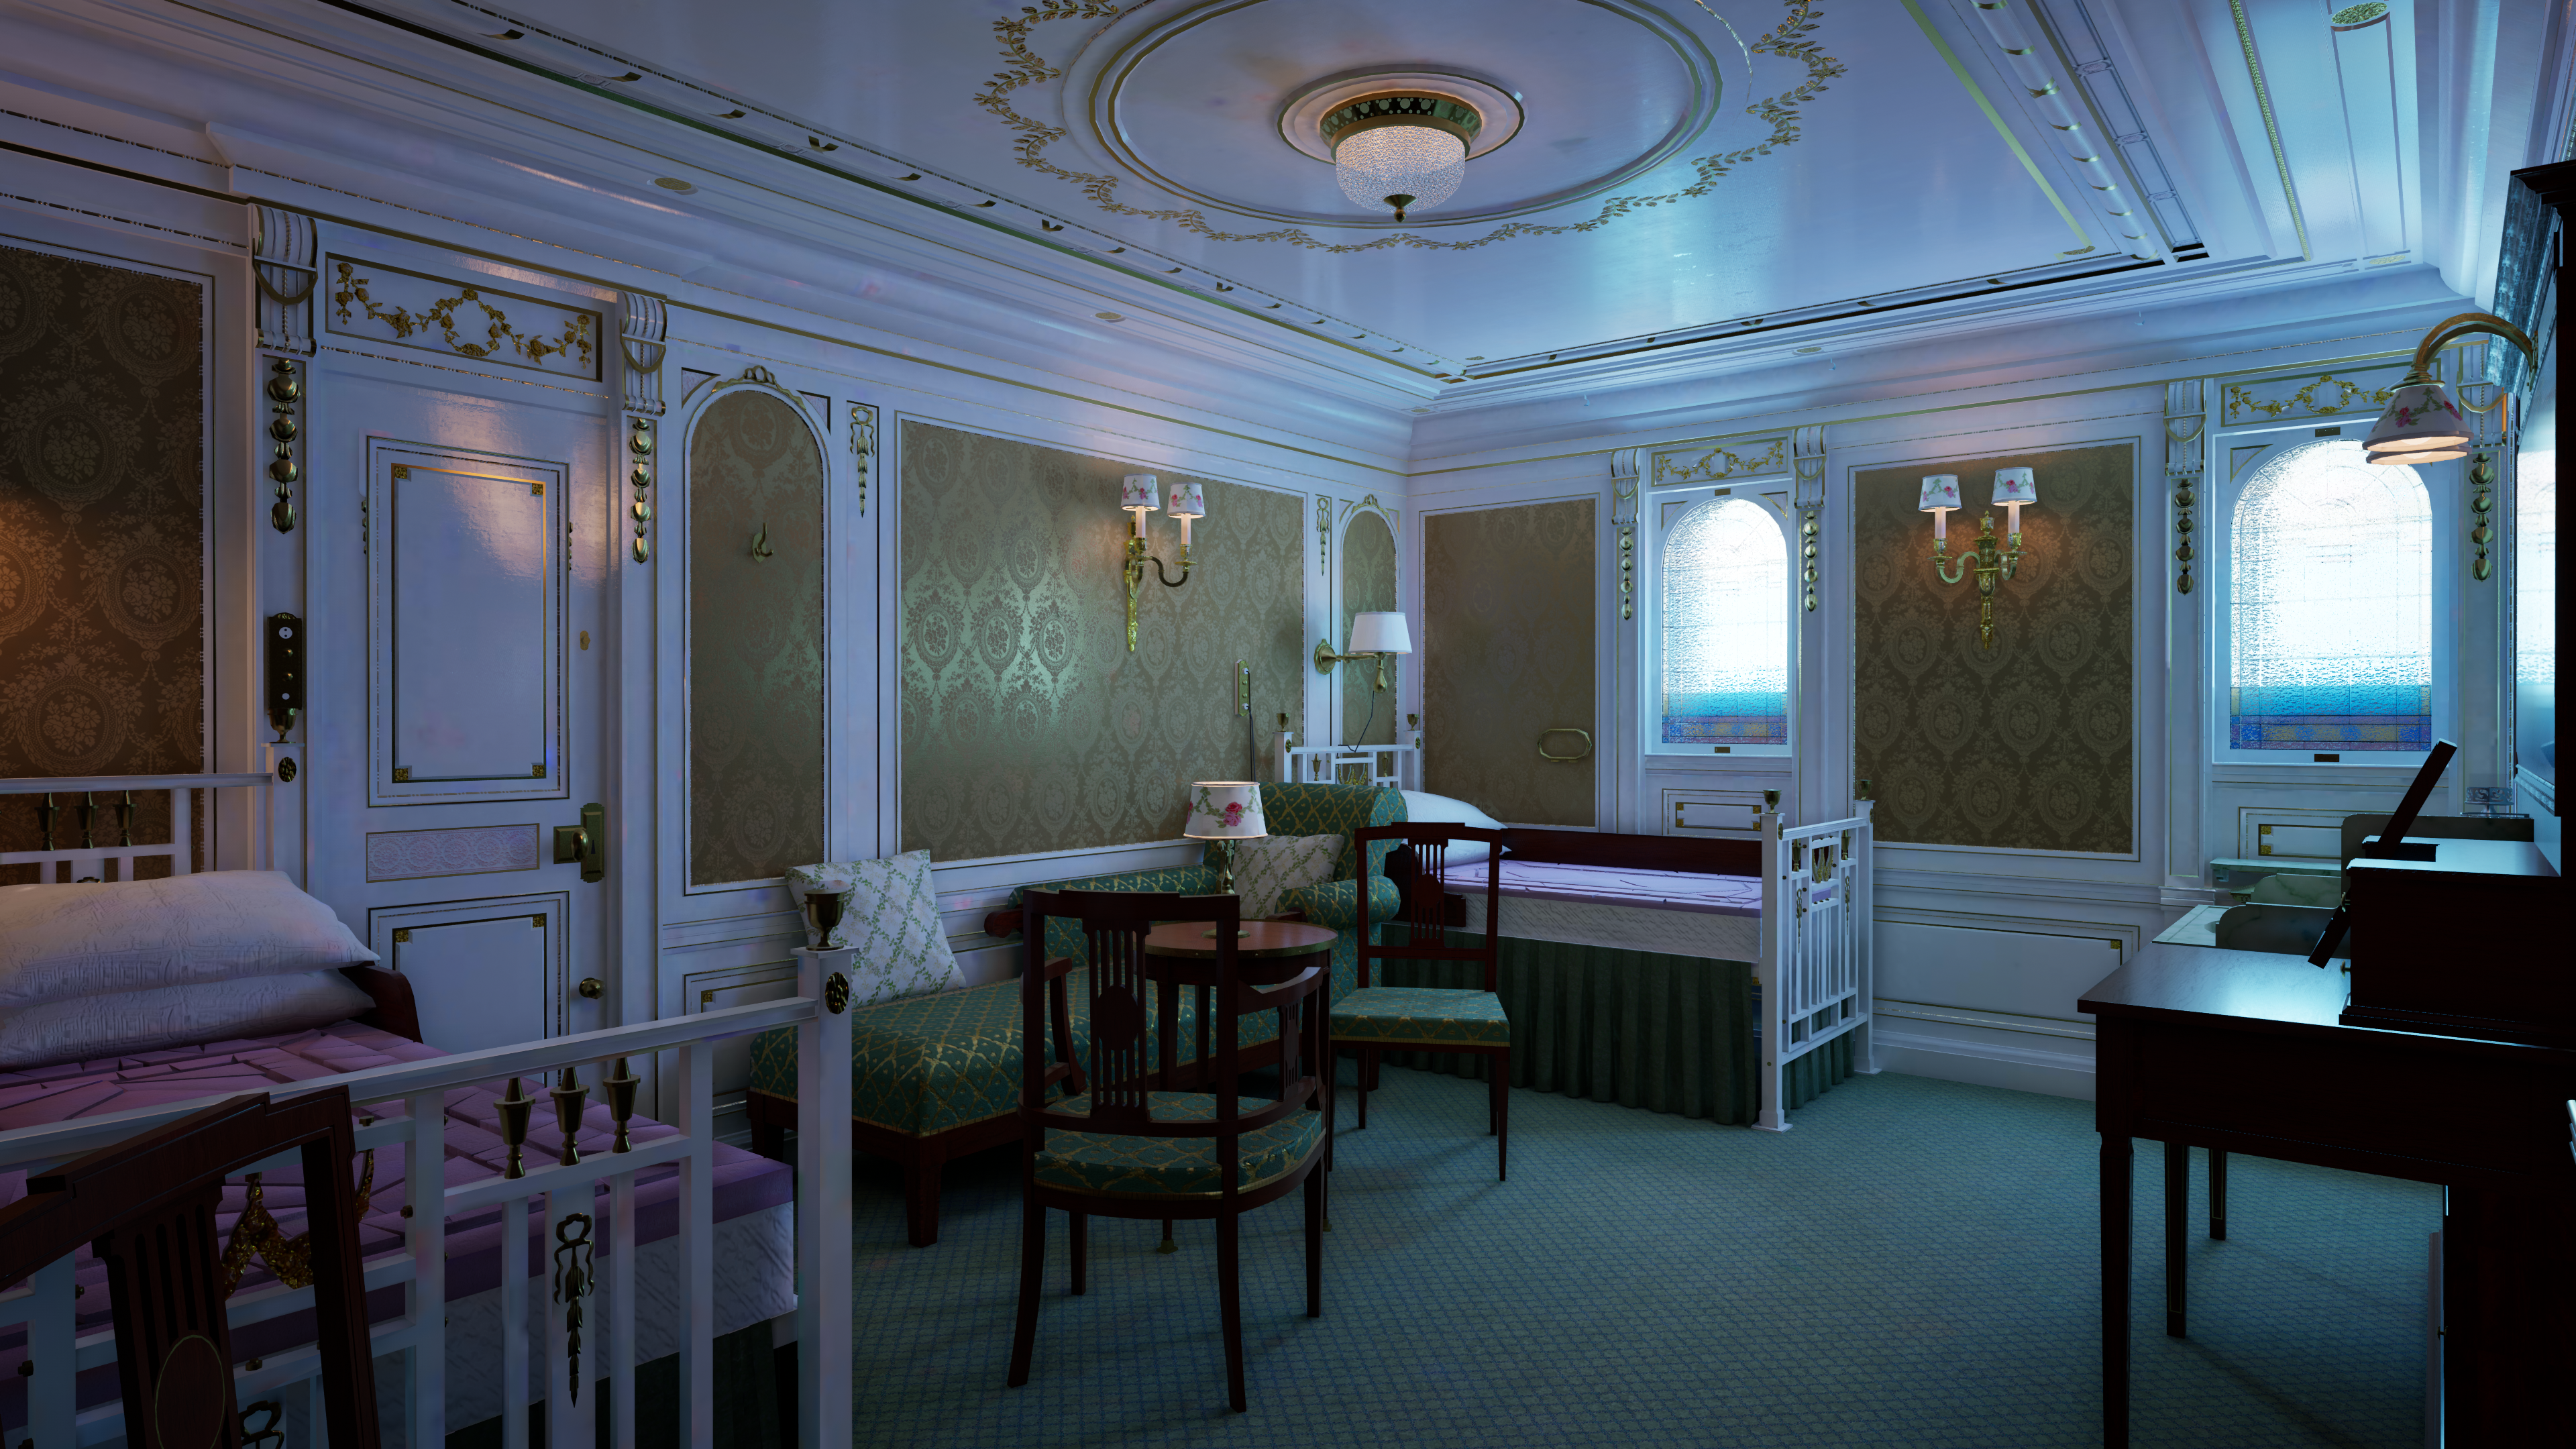 General 3840x2160 Nvidia RTX Titanic CGI digital art interior bed chair table lamp window piano musical instrument